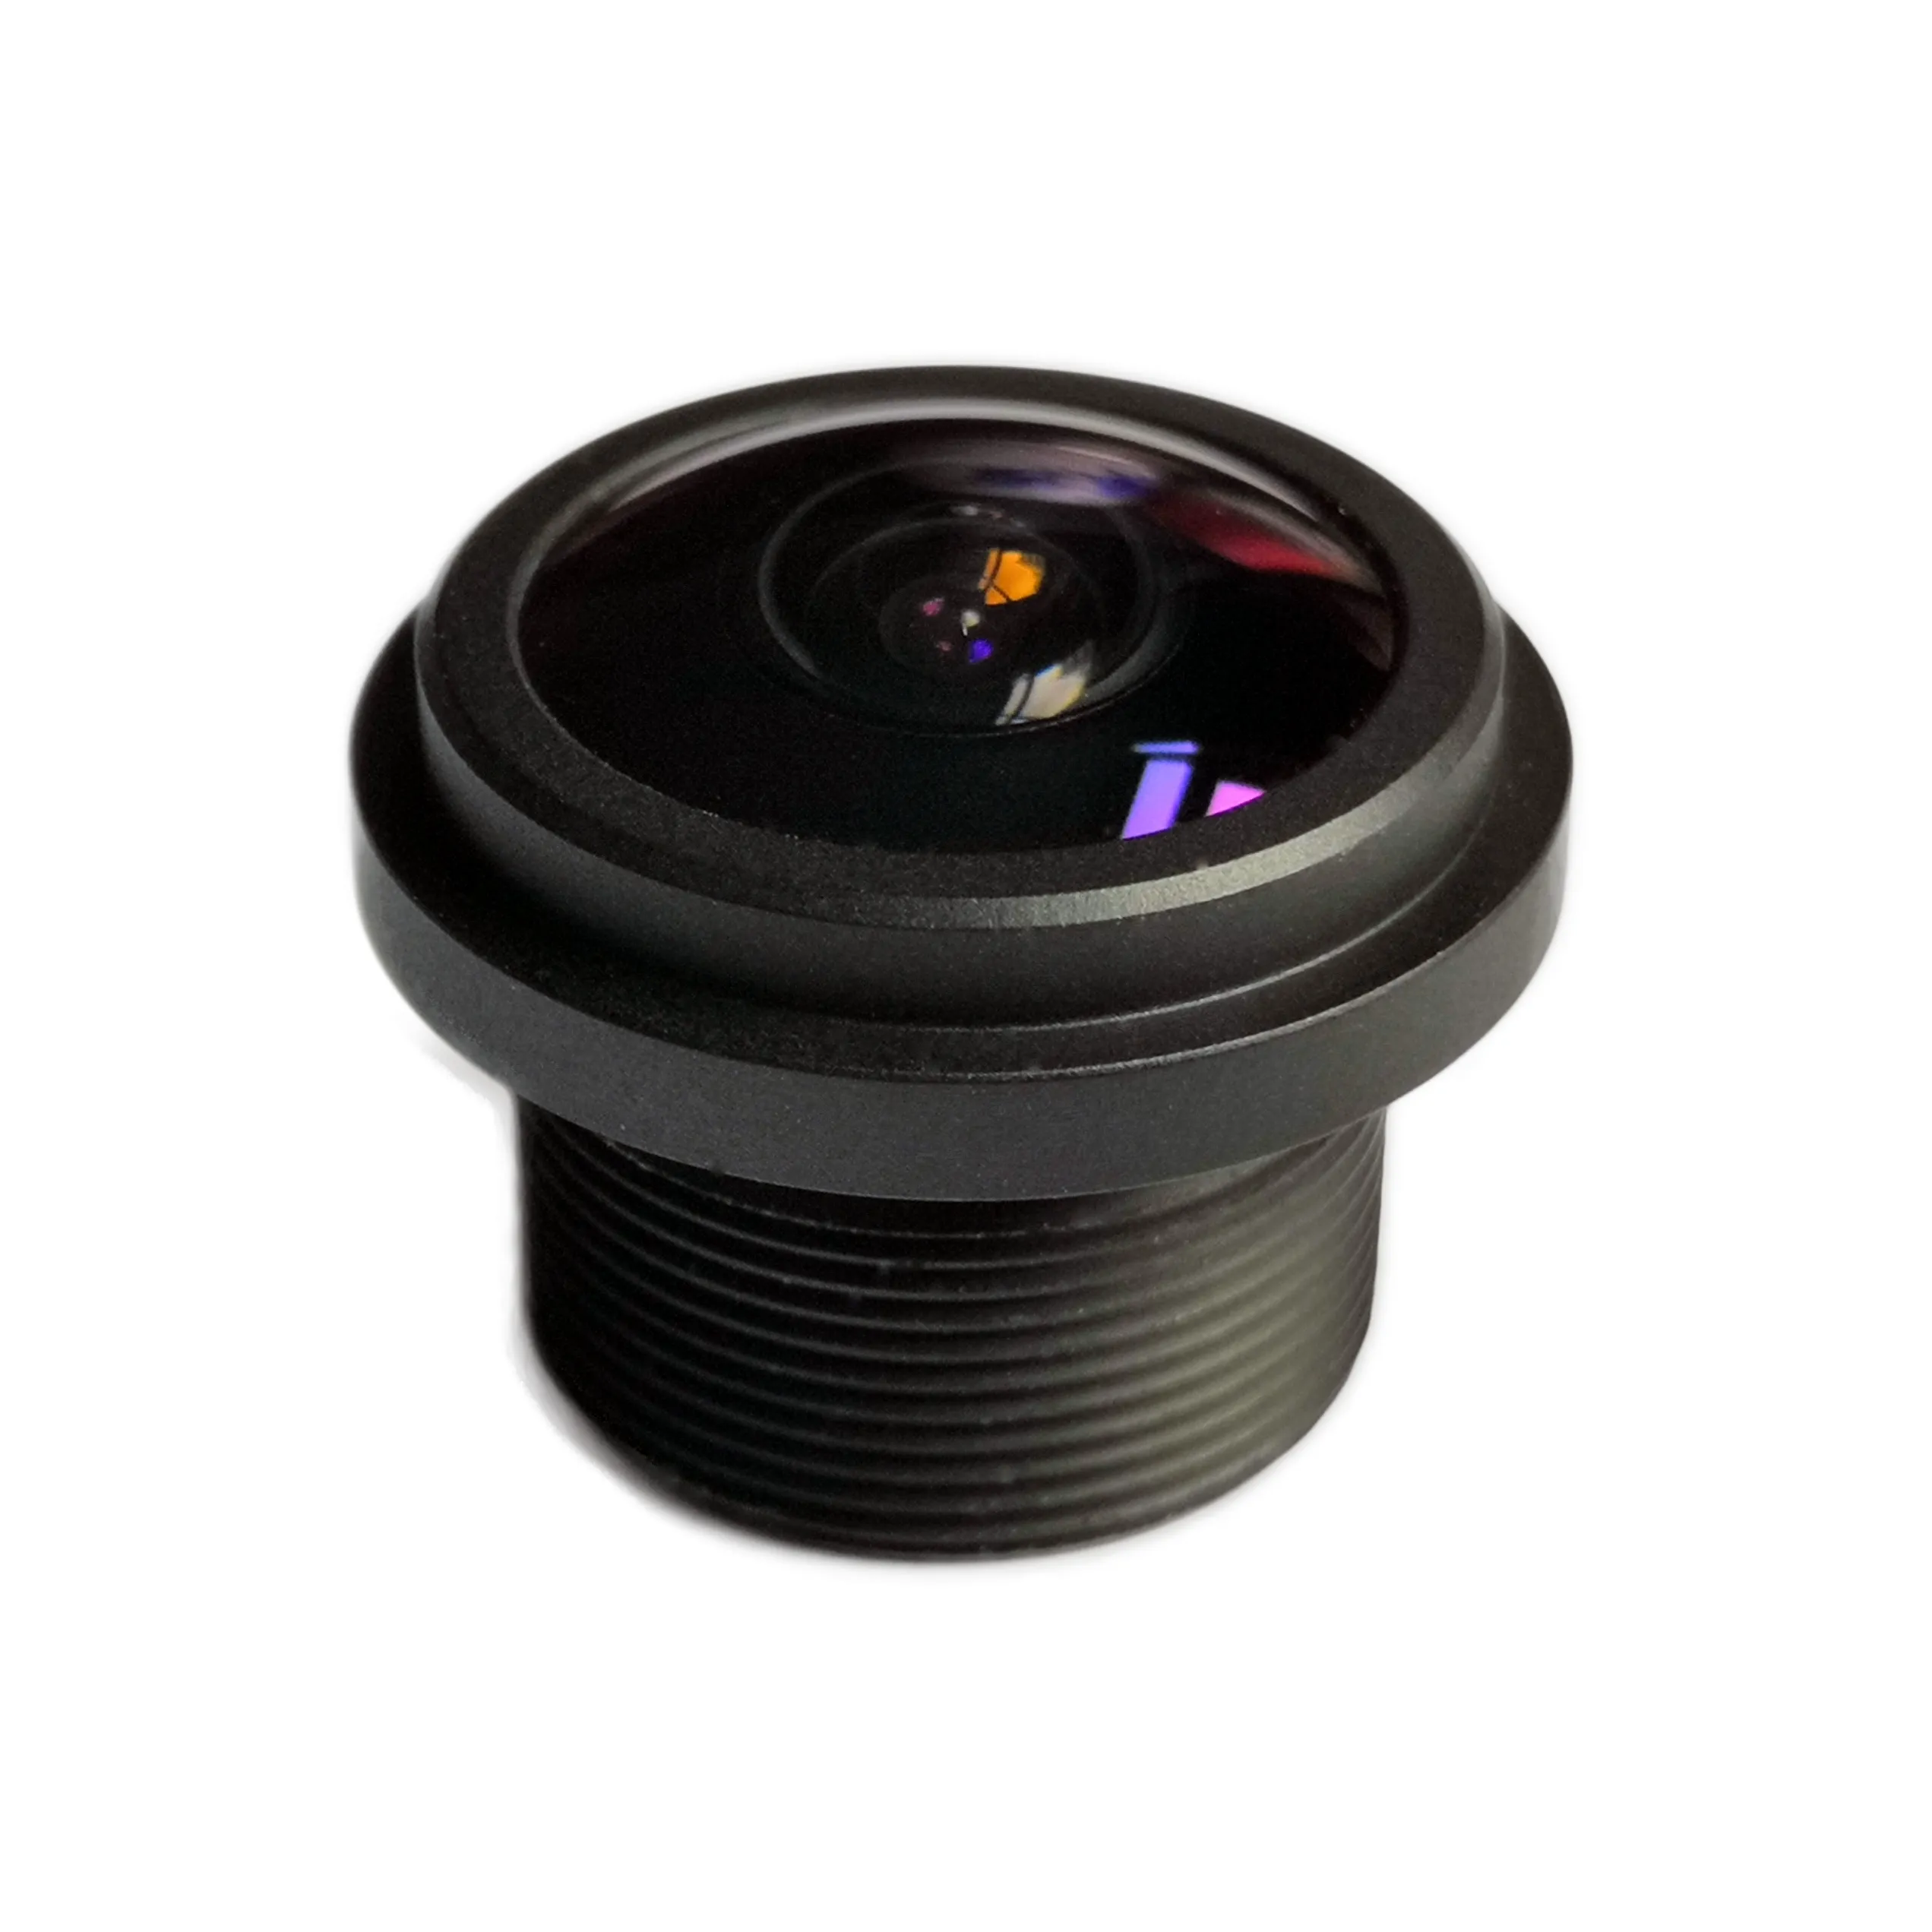 OKSee 1/3 "1/4" Super panorámica lente de ojo de pez lente de M12 cctv lens